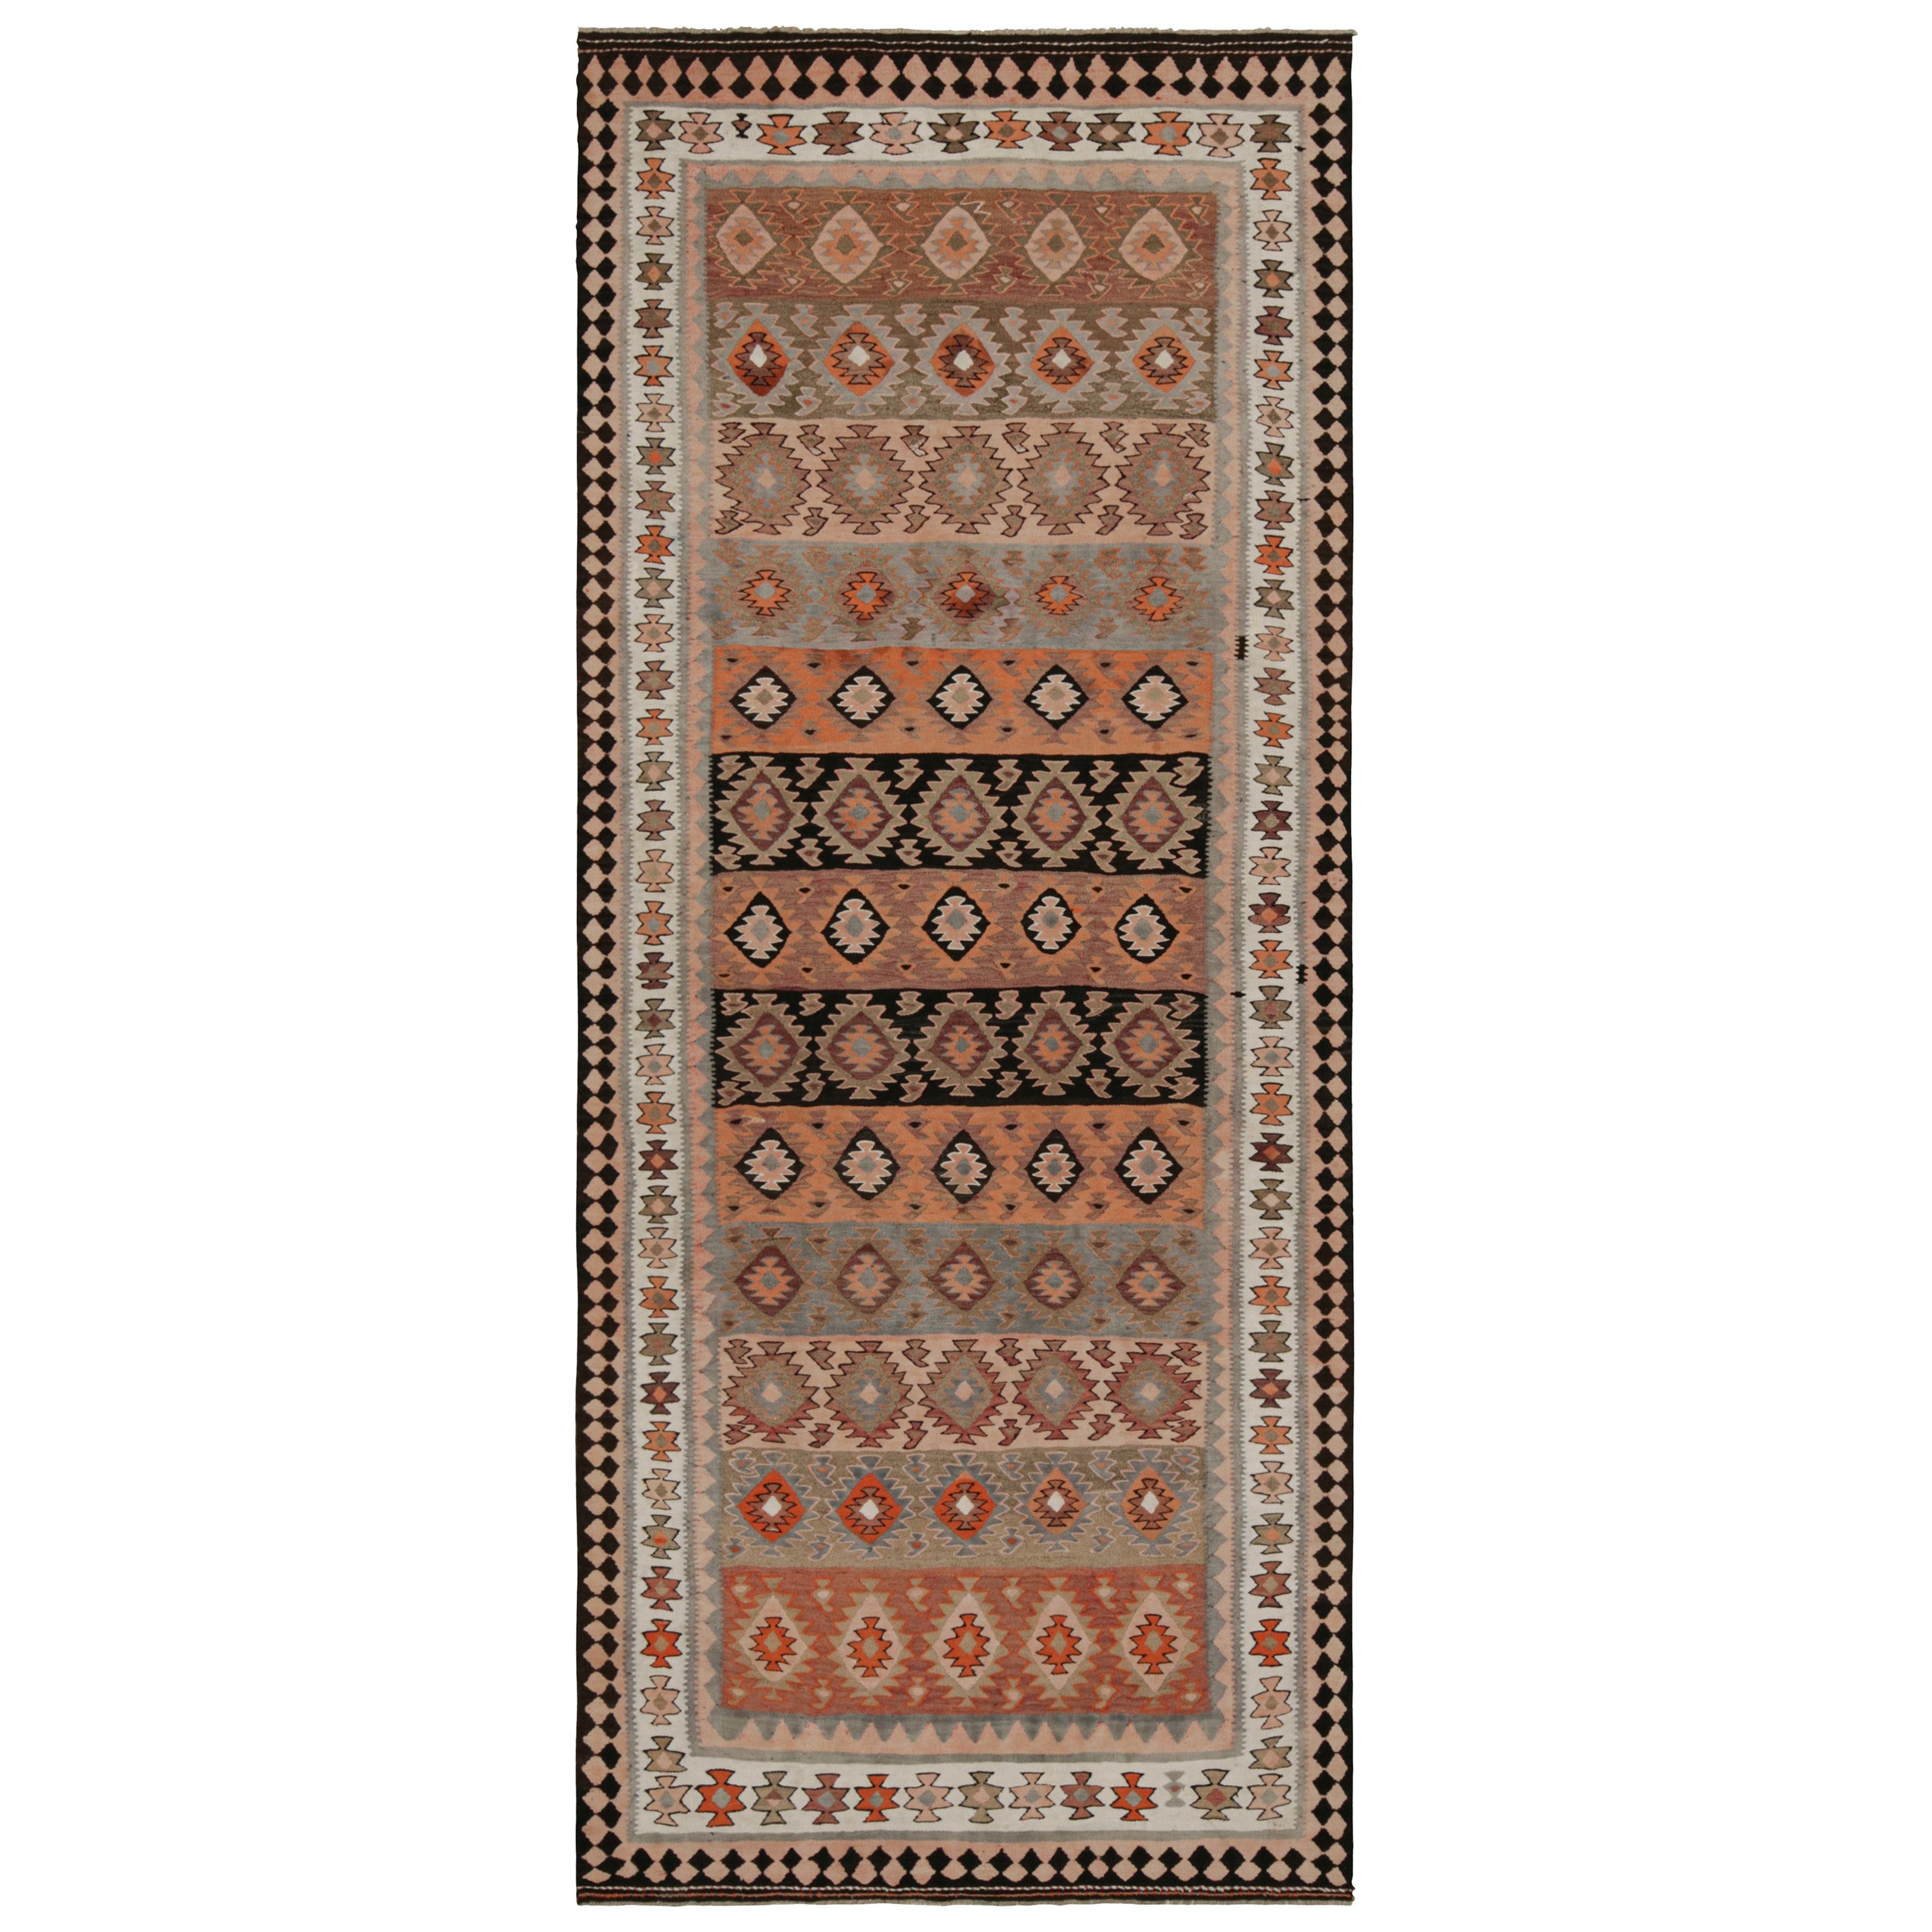 Vintage Afghan Tribal Kilim with Polychromatic Patterns by Rug & Kilim For Sale